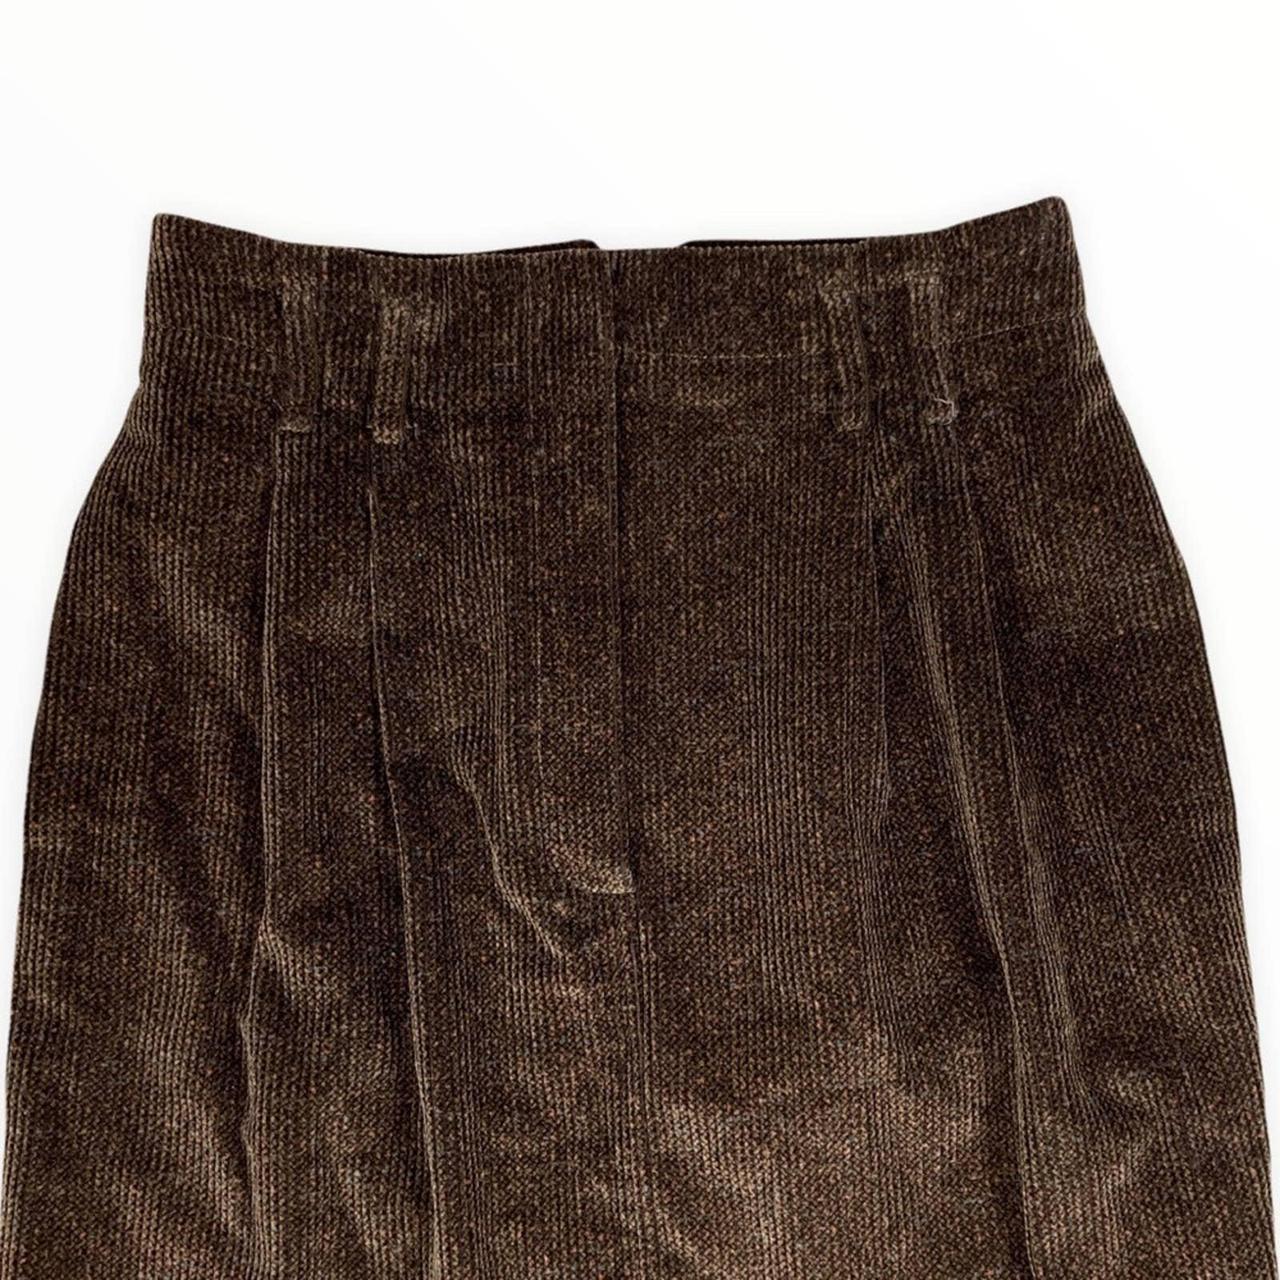 Women's Brown Skirt (3)